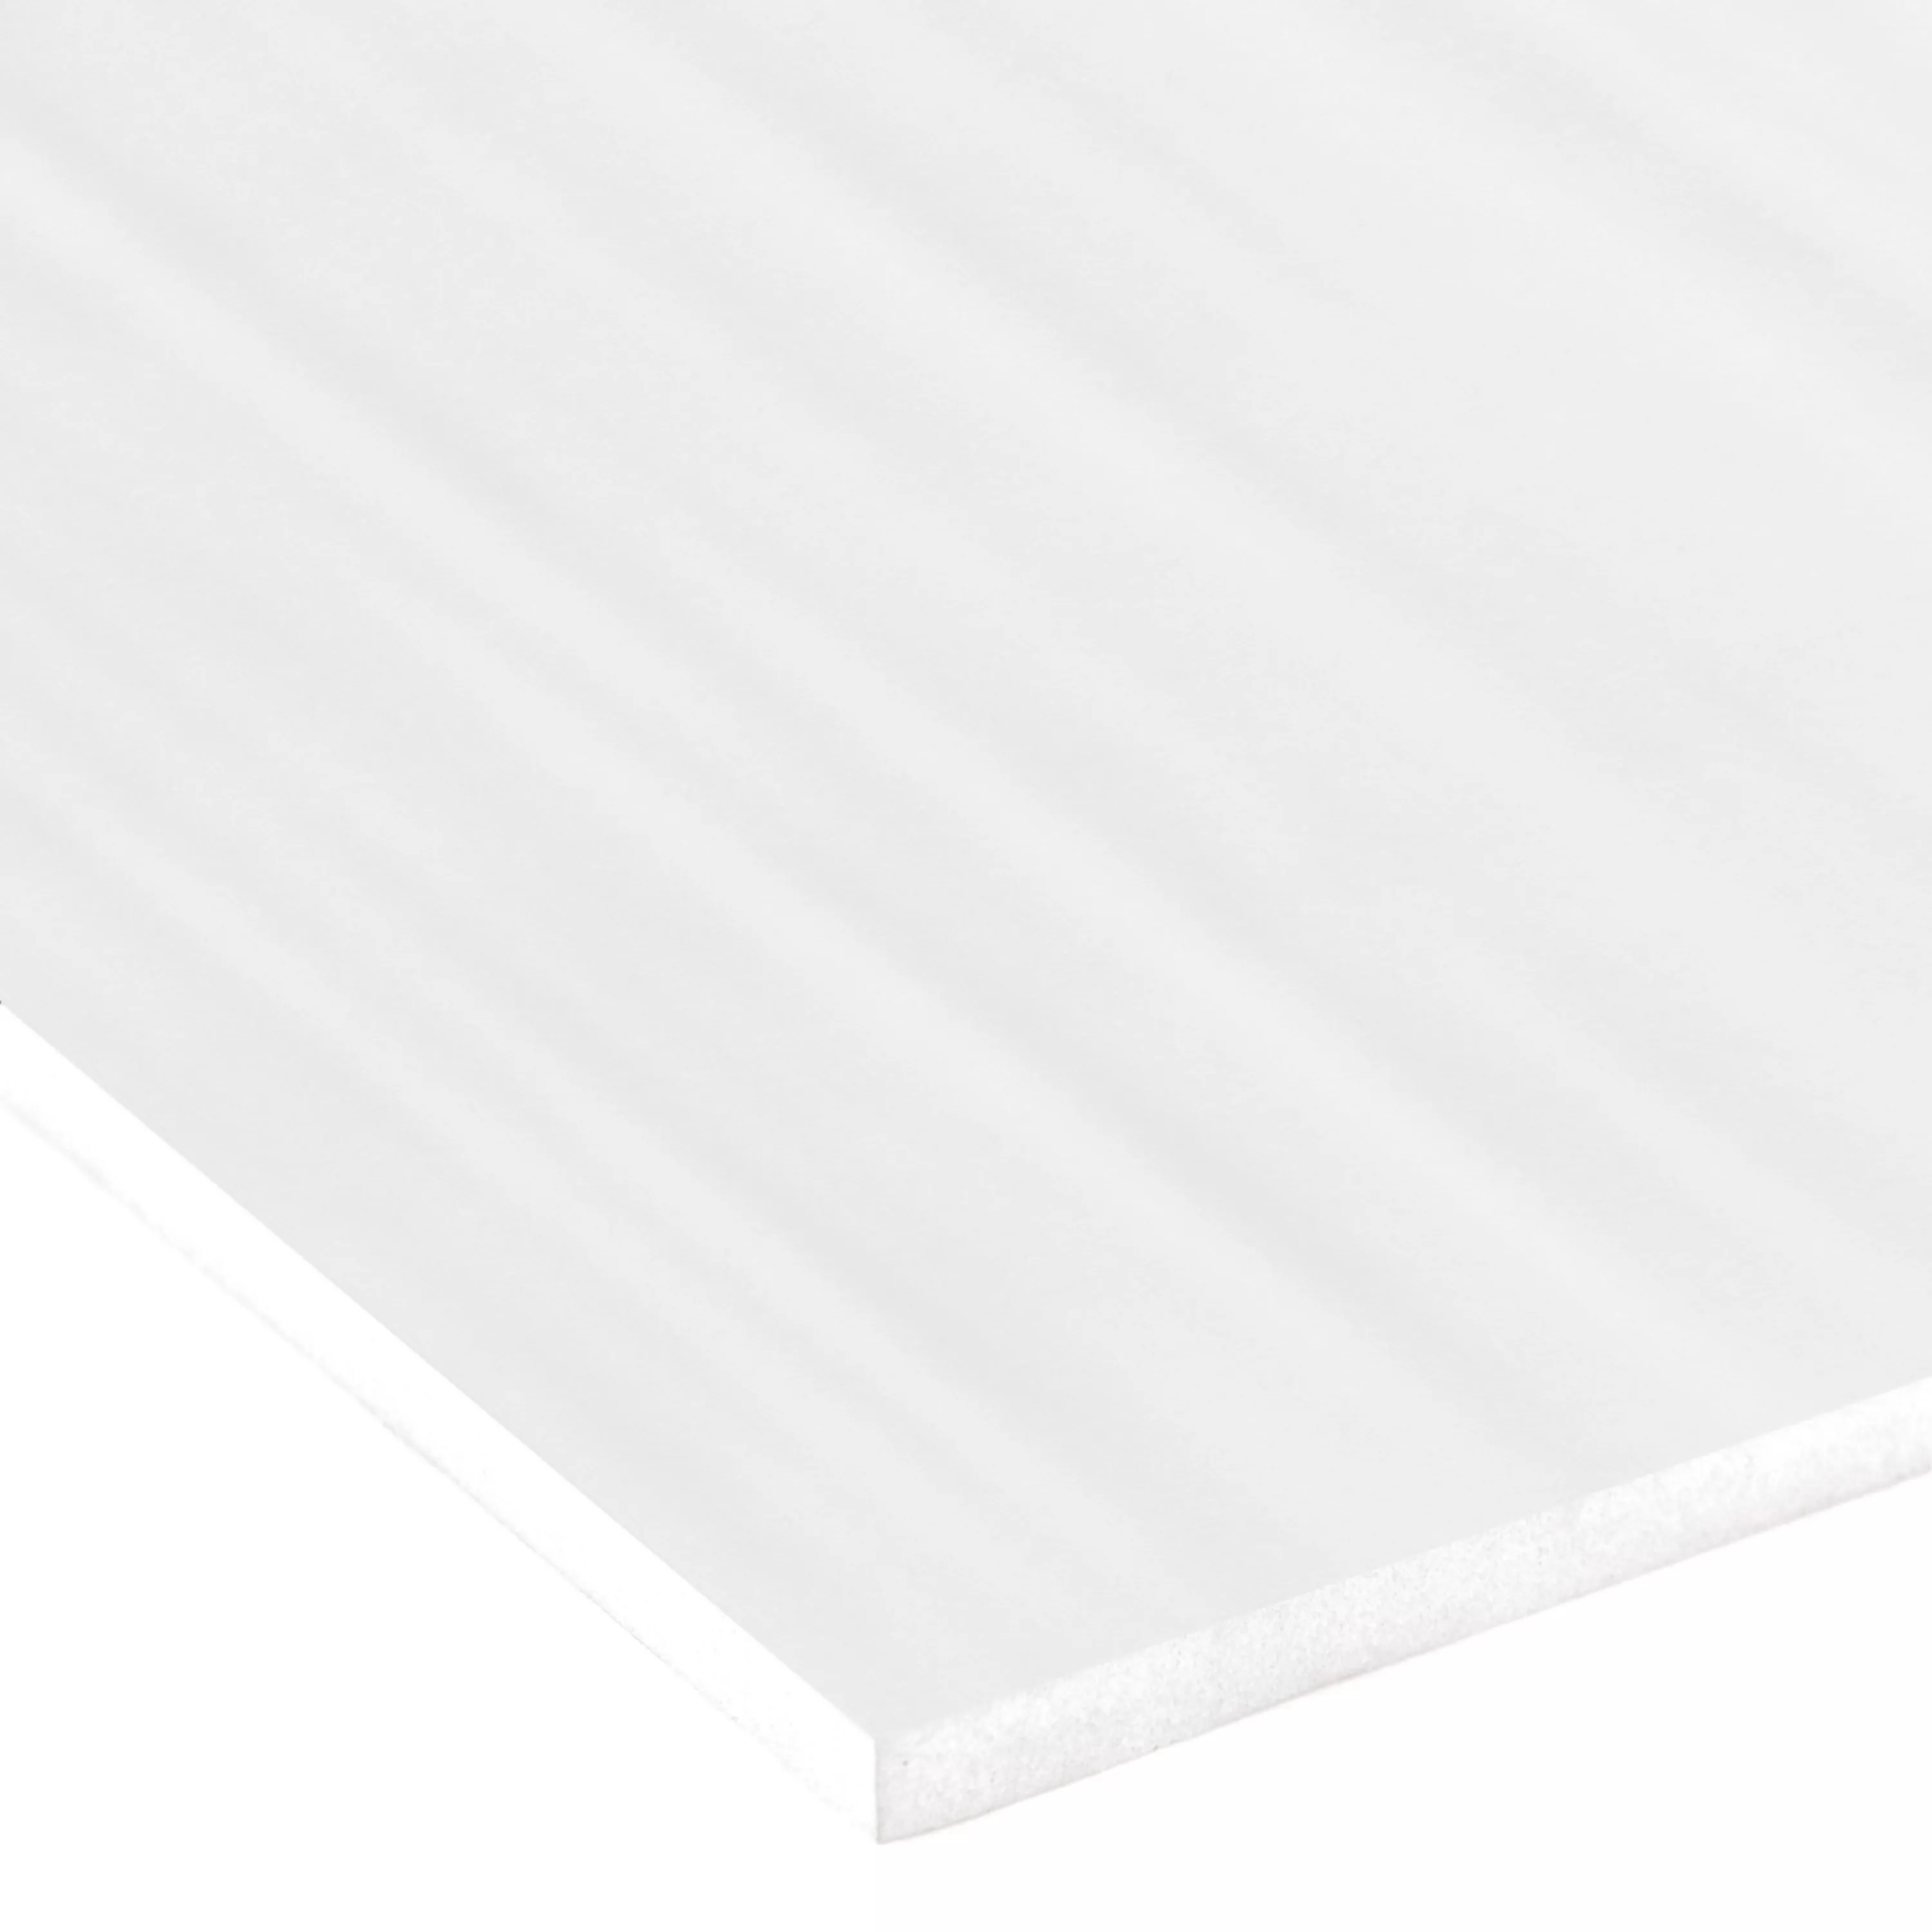 Sample Wall Tiles Richard Wave 30x60cm White Mat